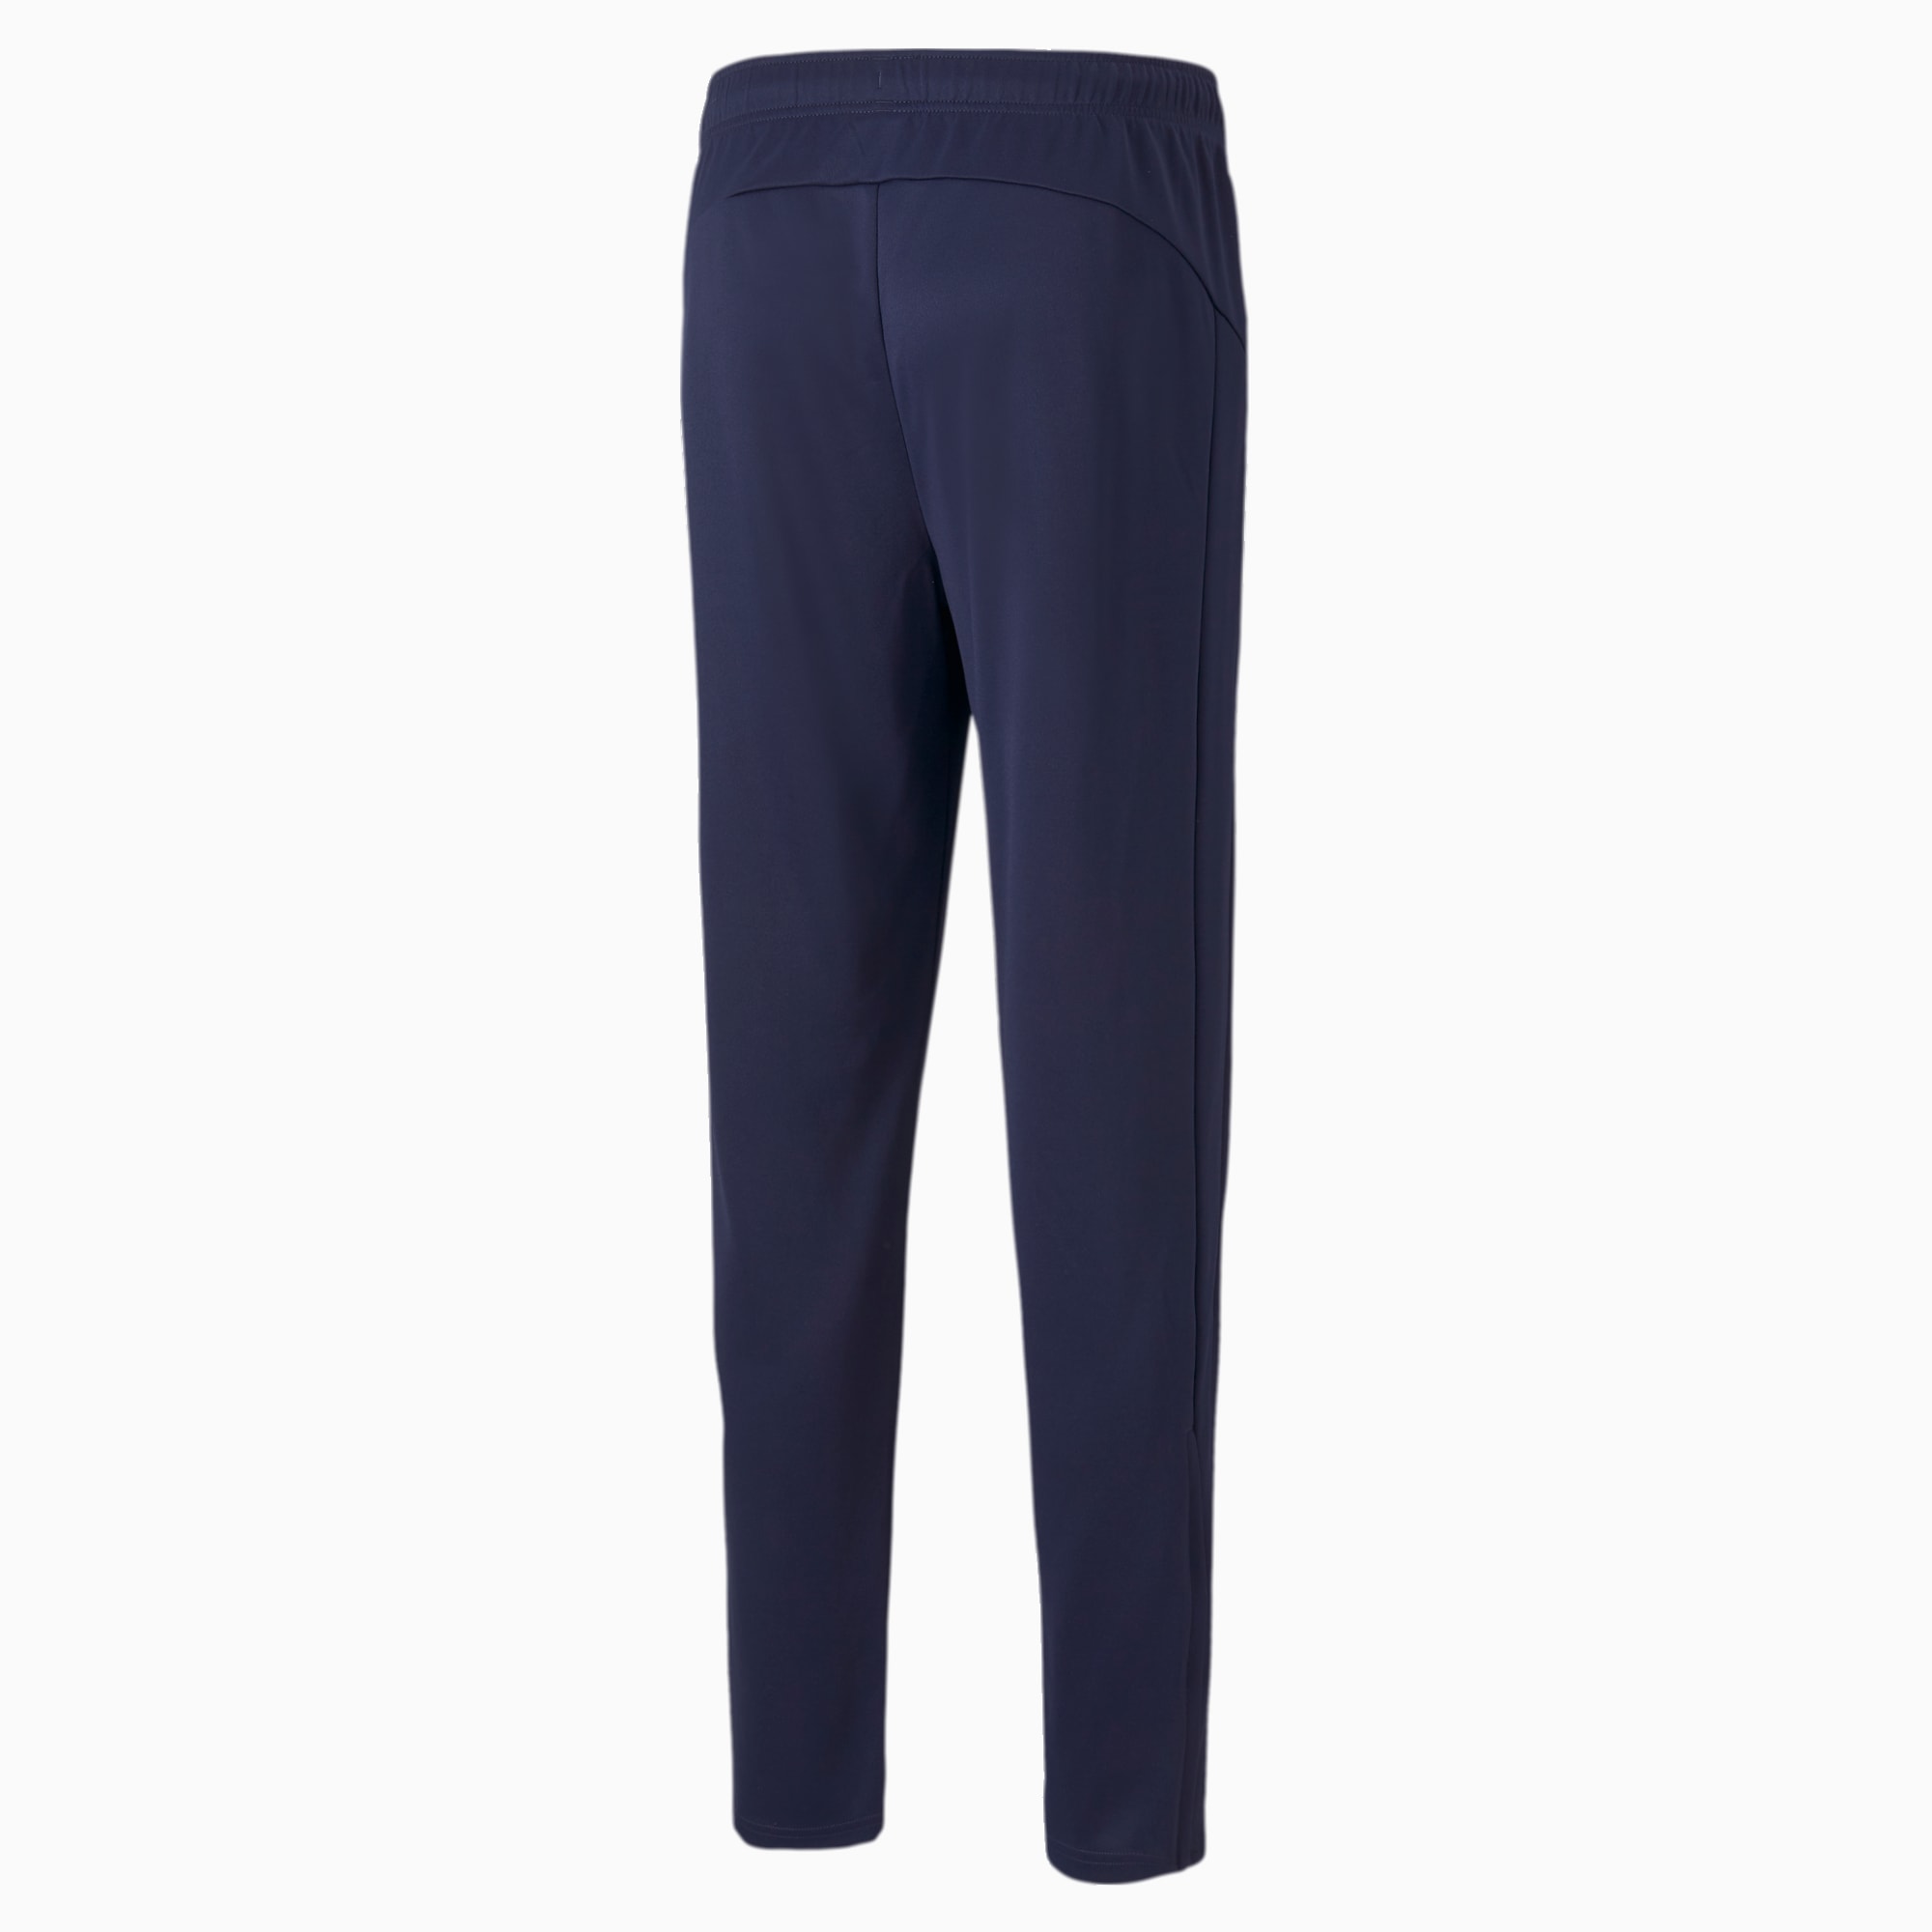 PUMA Active Tricot Men's Sweatpants, Peacoat, Size 3XL, Clothing